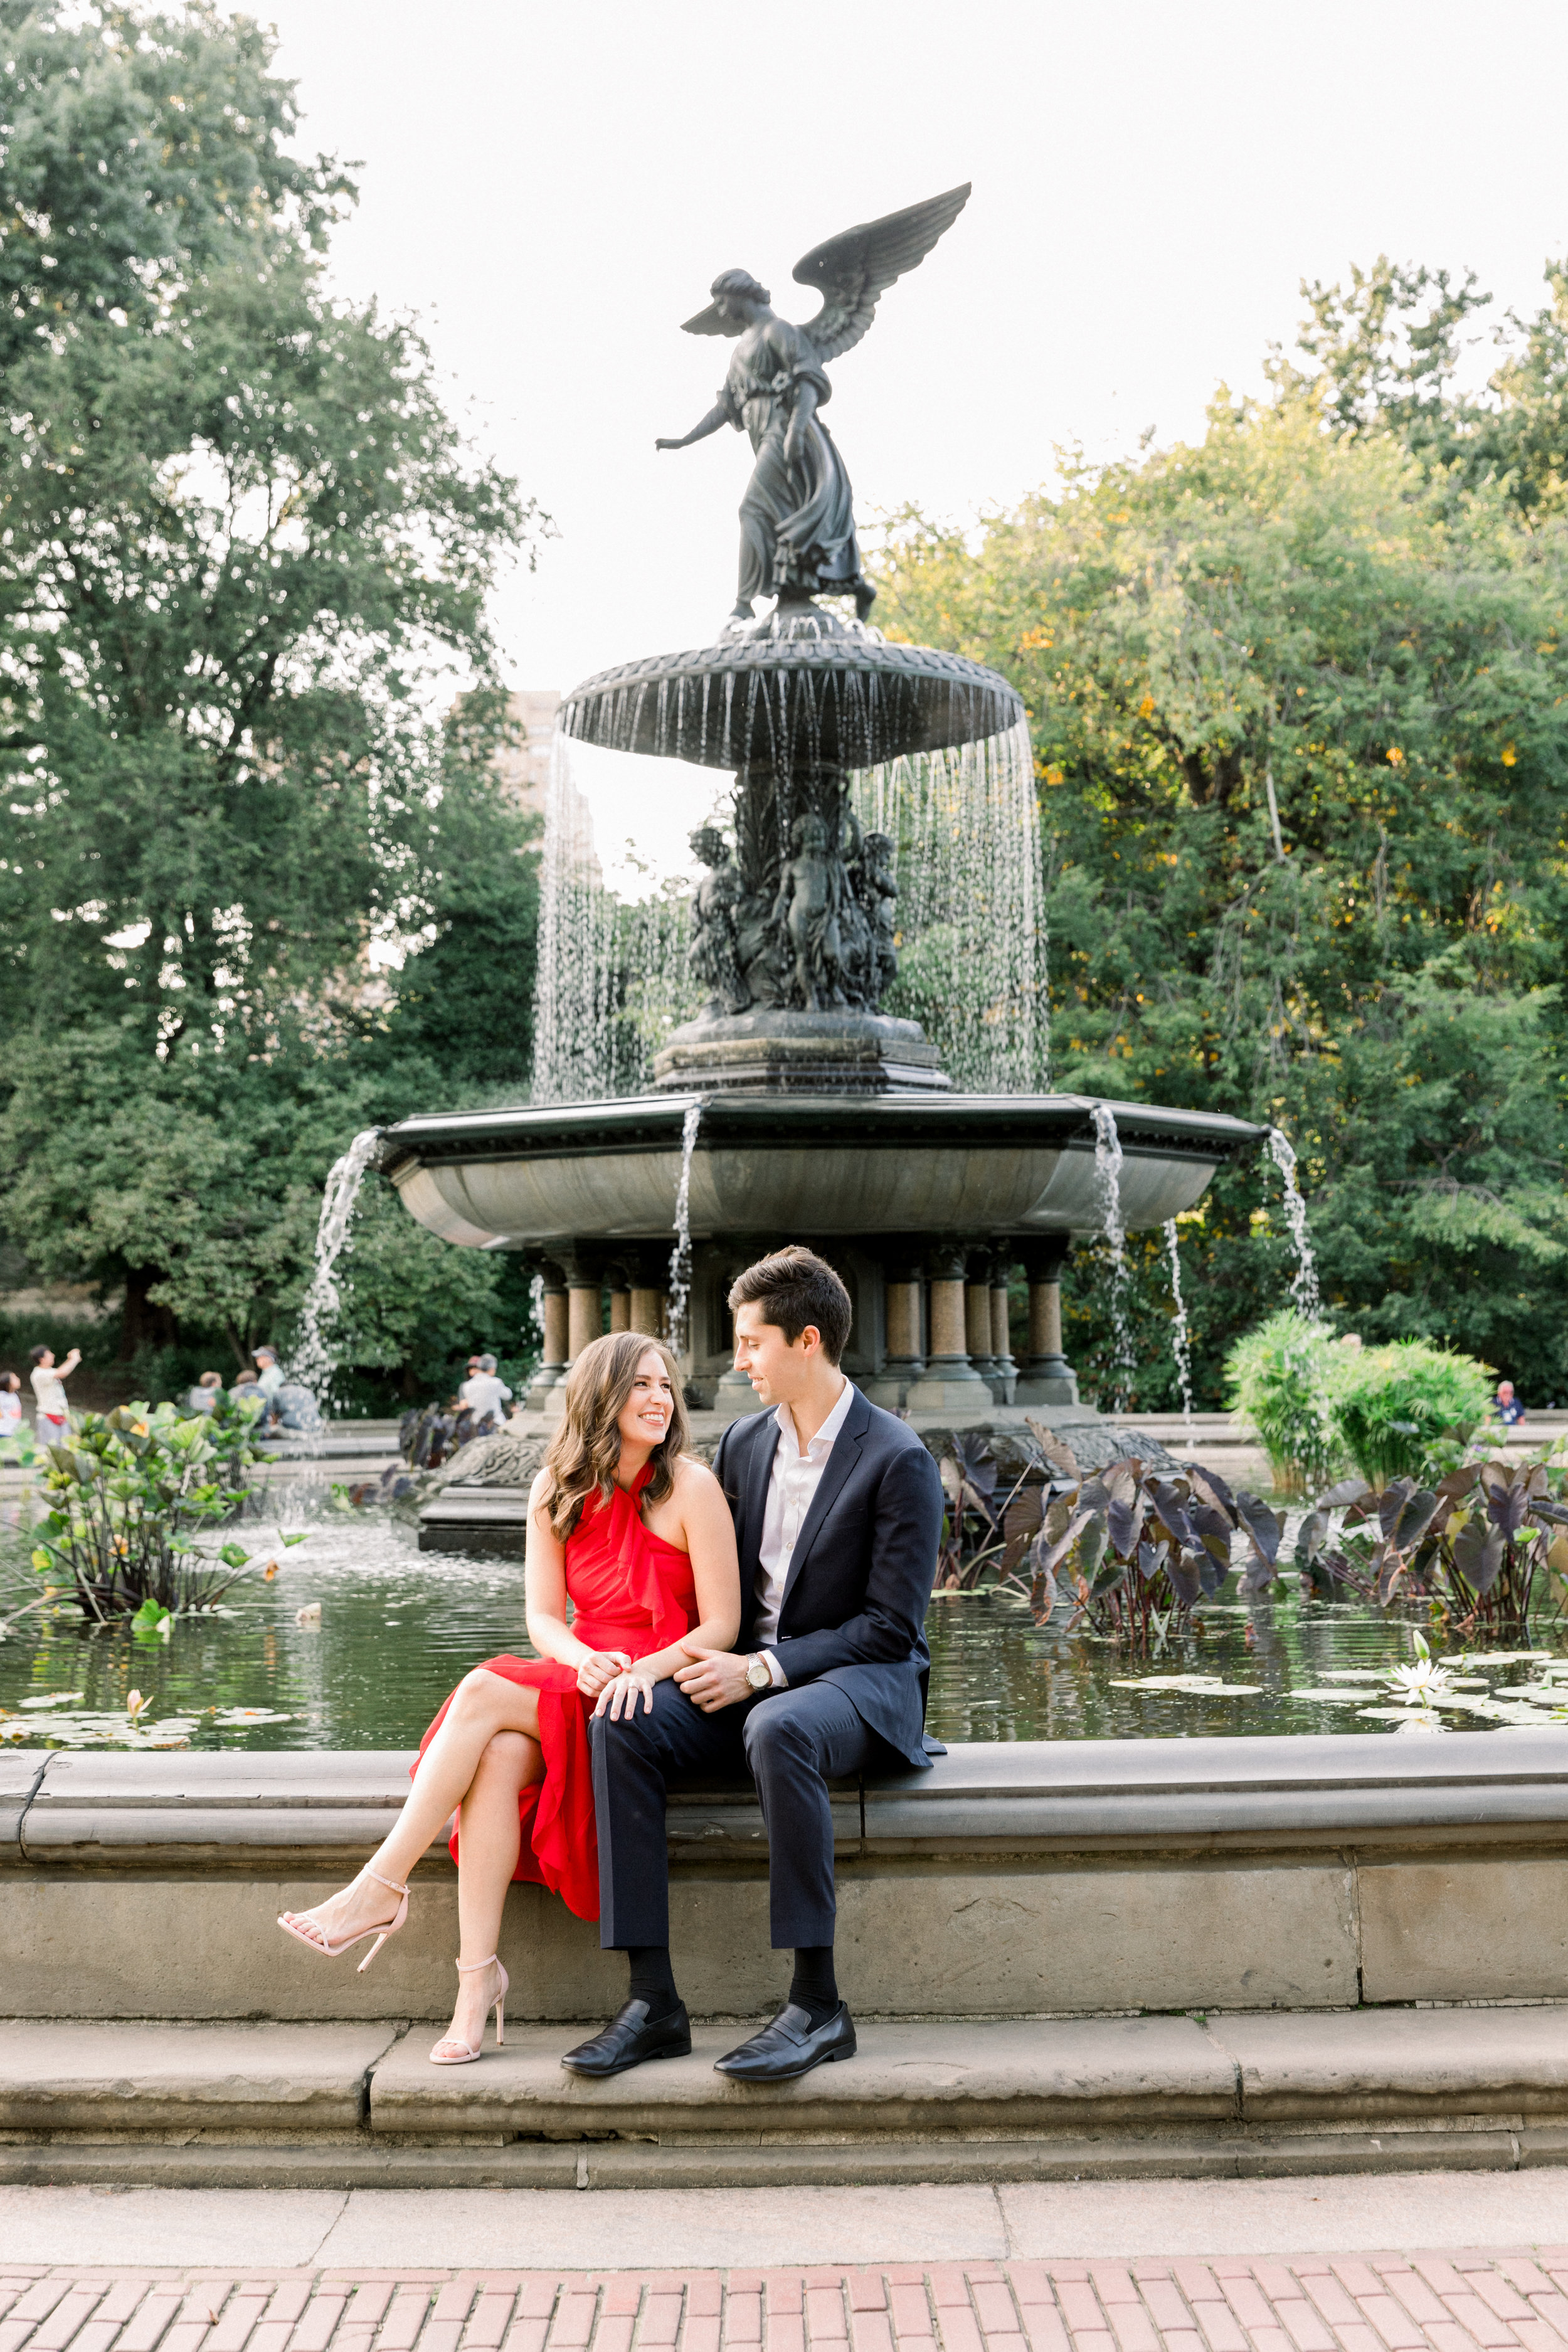 Central Park - New York - Bethesda Fountain, Central Park i…